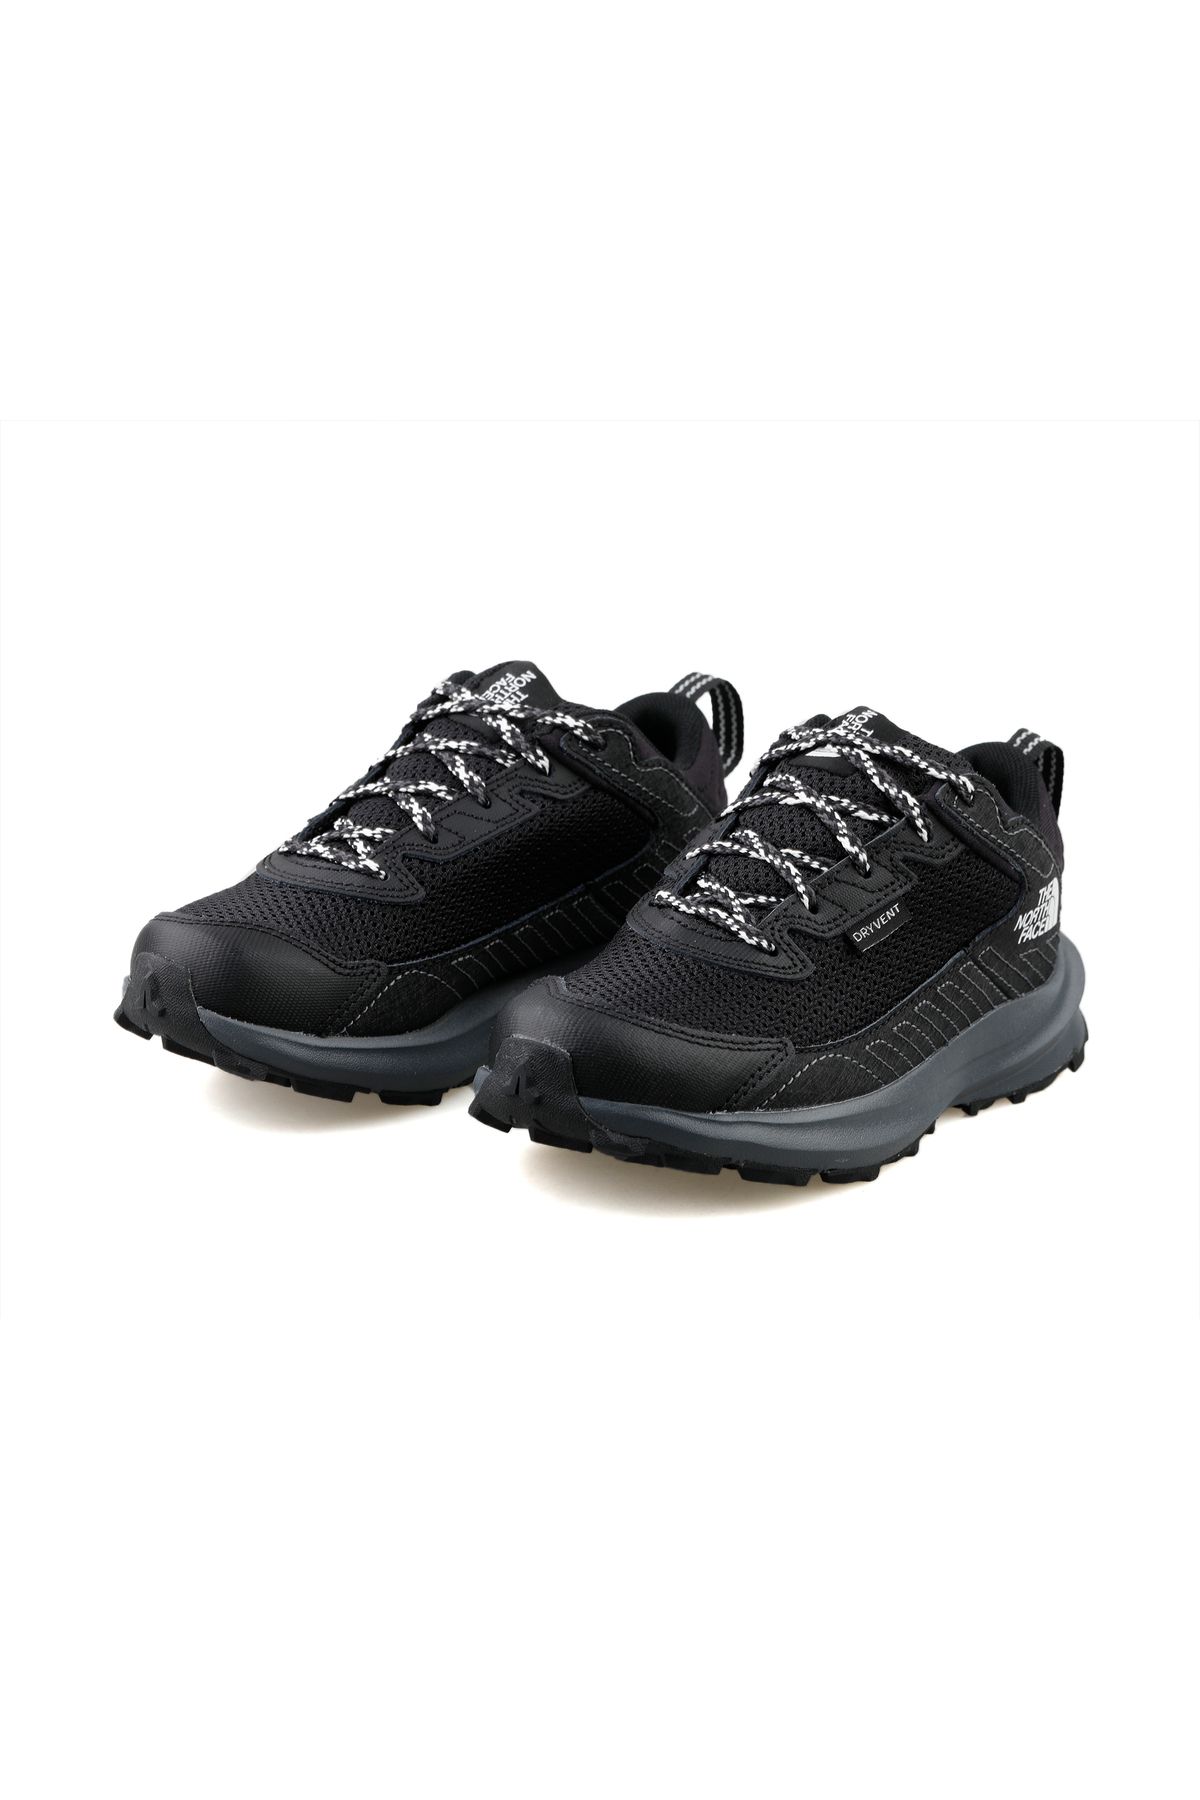 The North Face Y Fastpack Hiker Wp Genç Outdoor Ayakkabısı Siyah